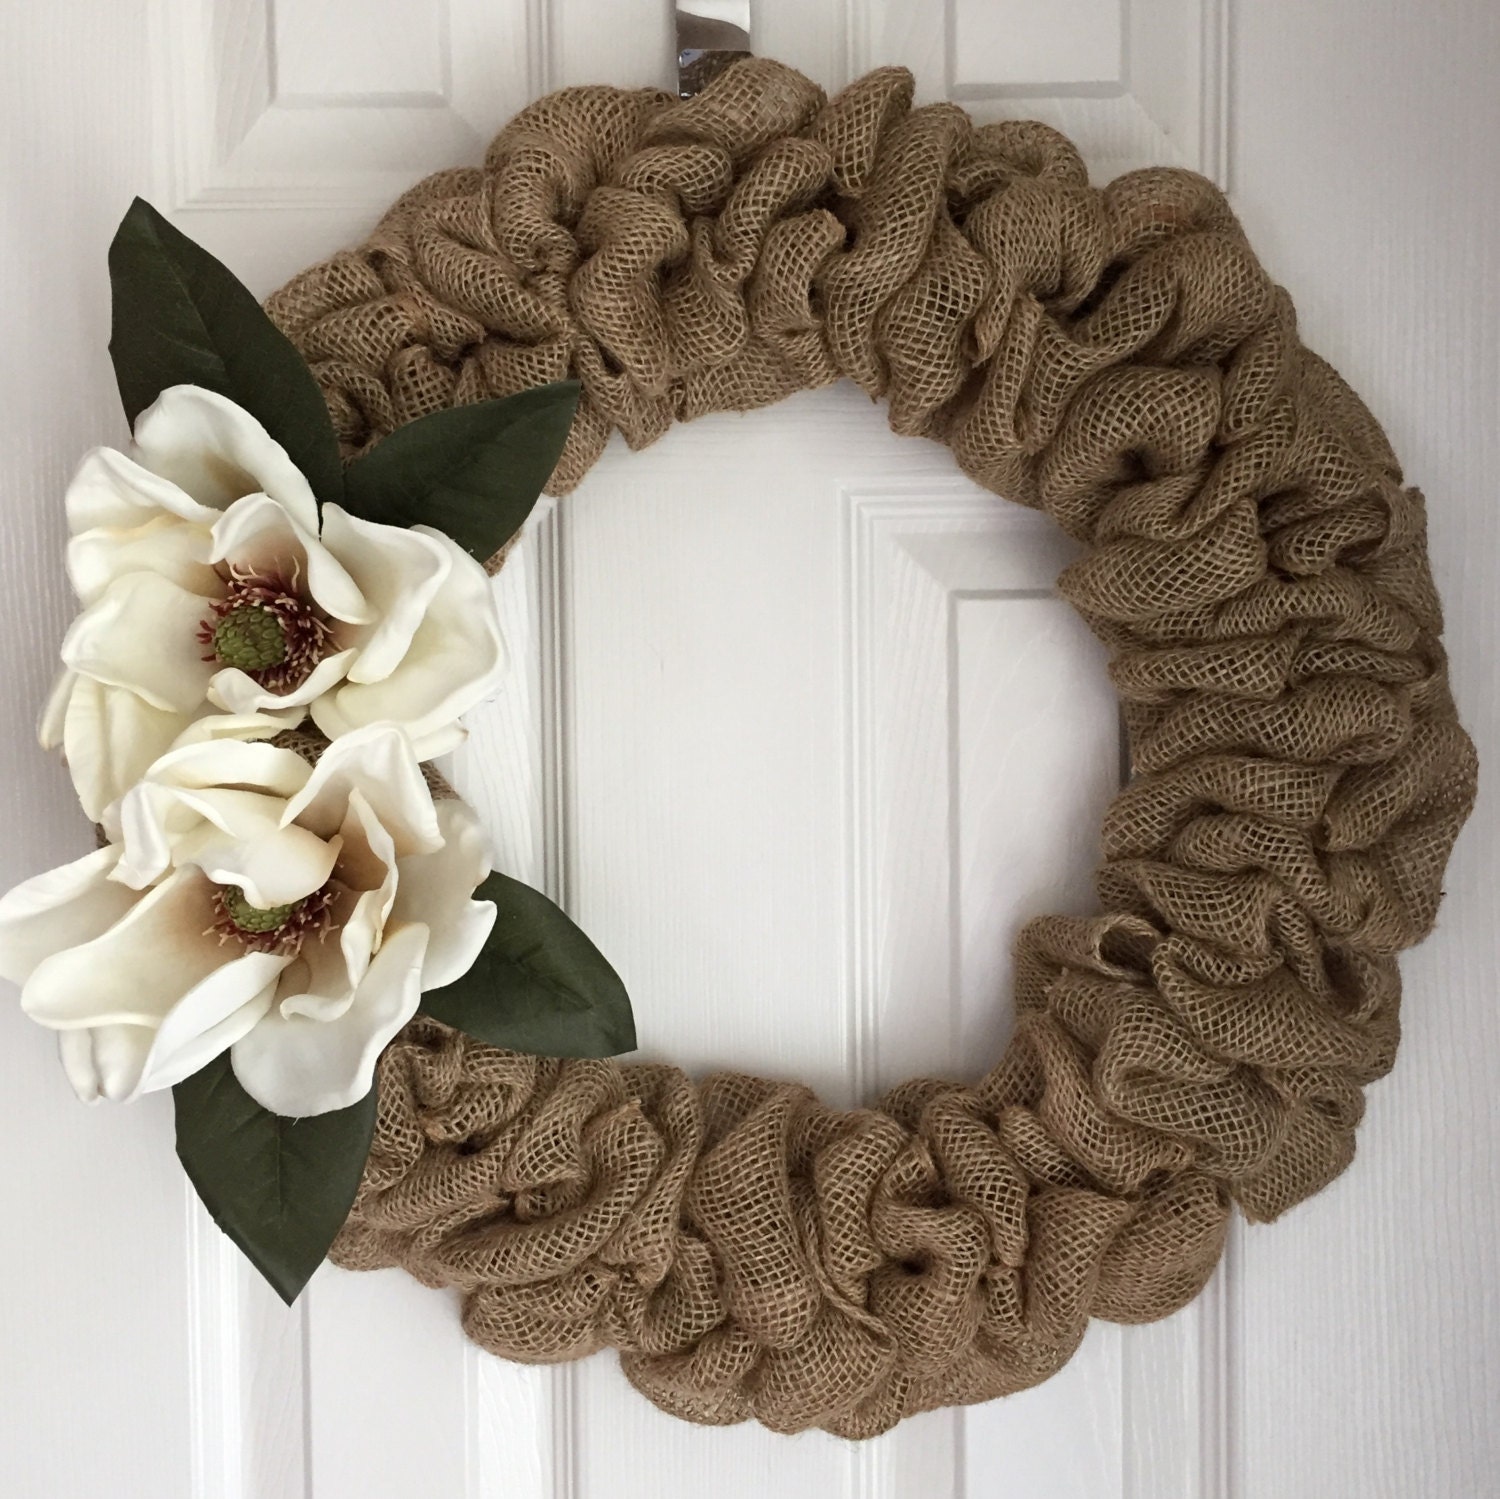 Rustic Burlap Winter Wreath for Front Door - White Magnolia Wreath - Everyday Rustic Wreath - Wedding Wreath - Burlap Magnolia Wreath